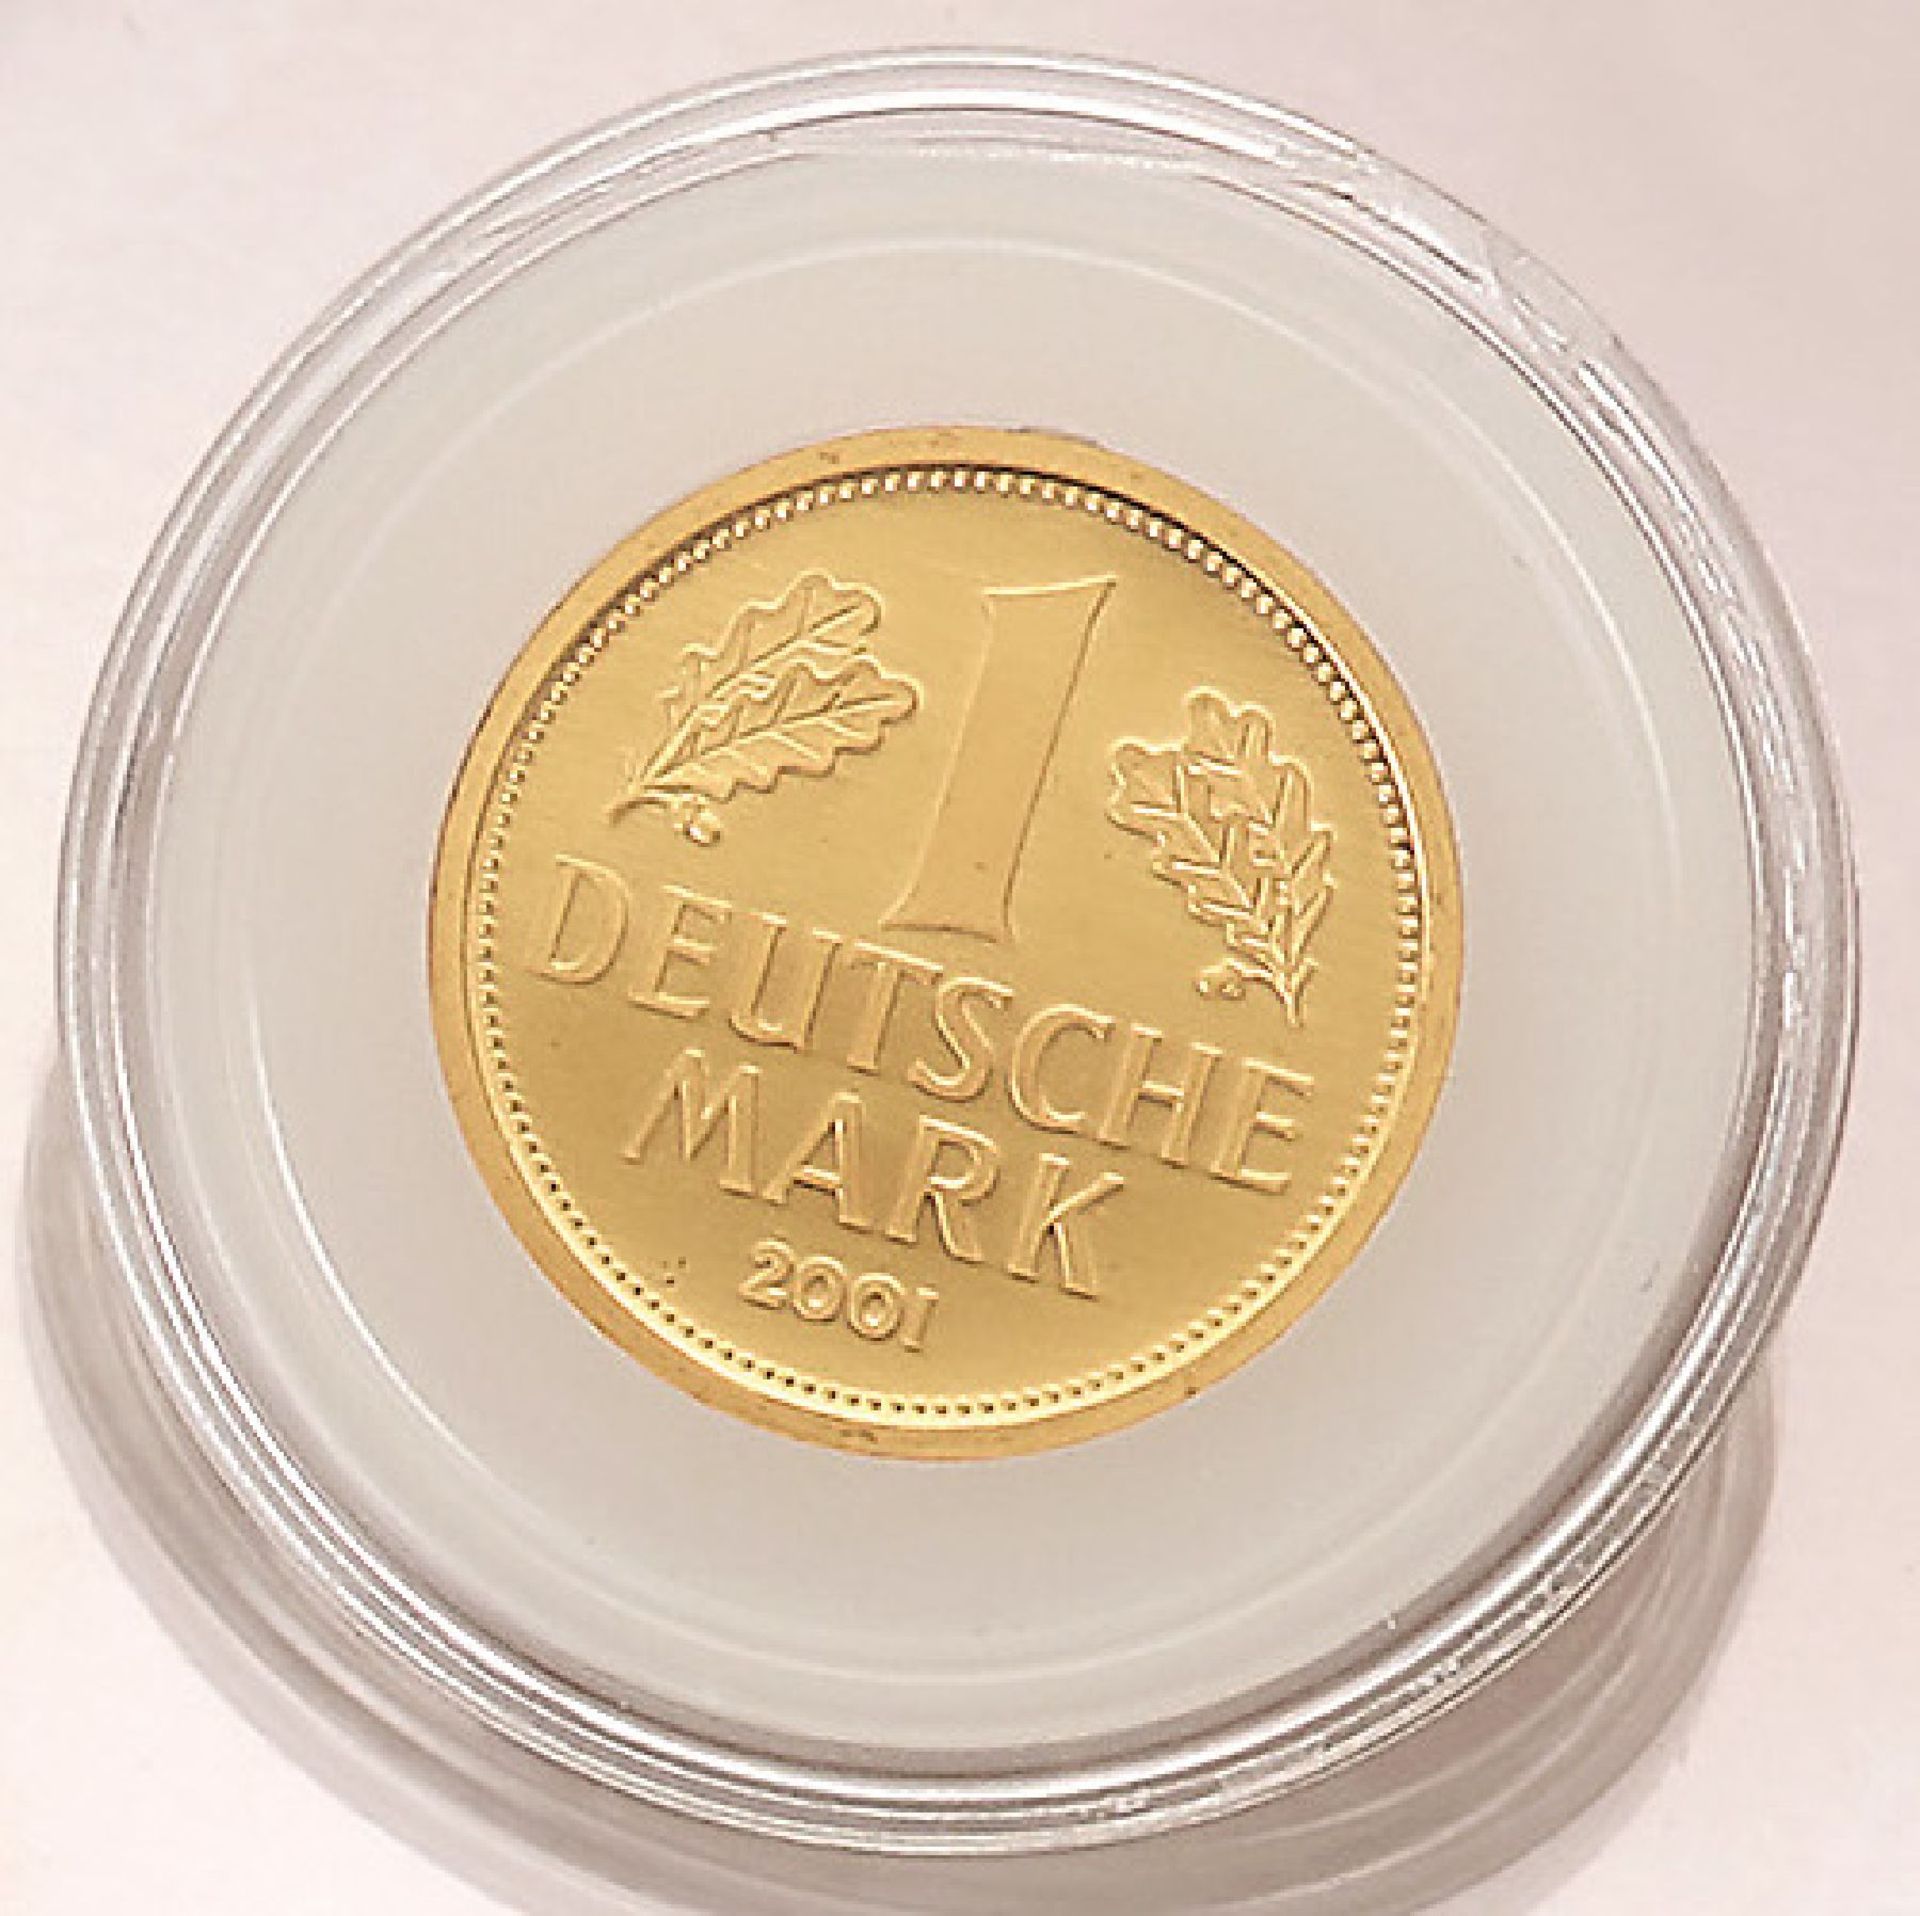 Goldmünze, 1 Mark, Deutschland, 2001, sogn. Goldmark,